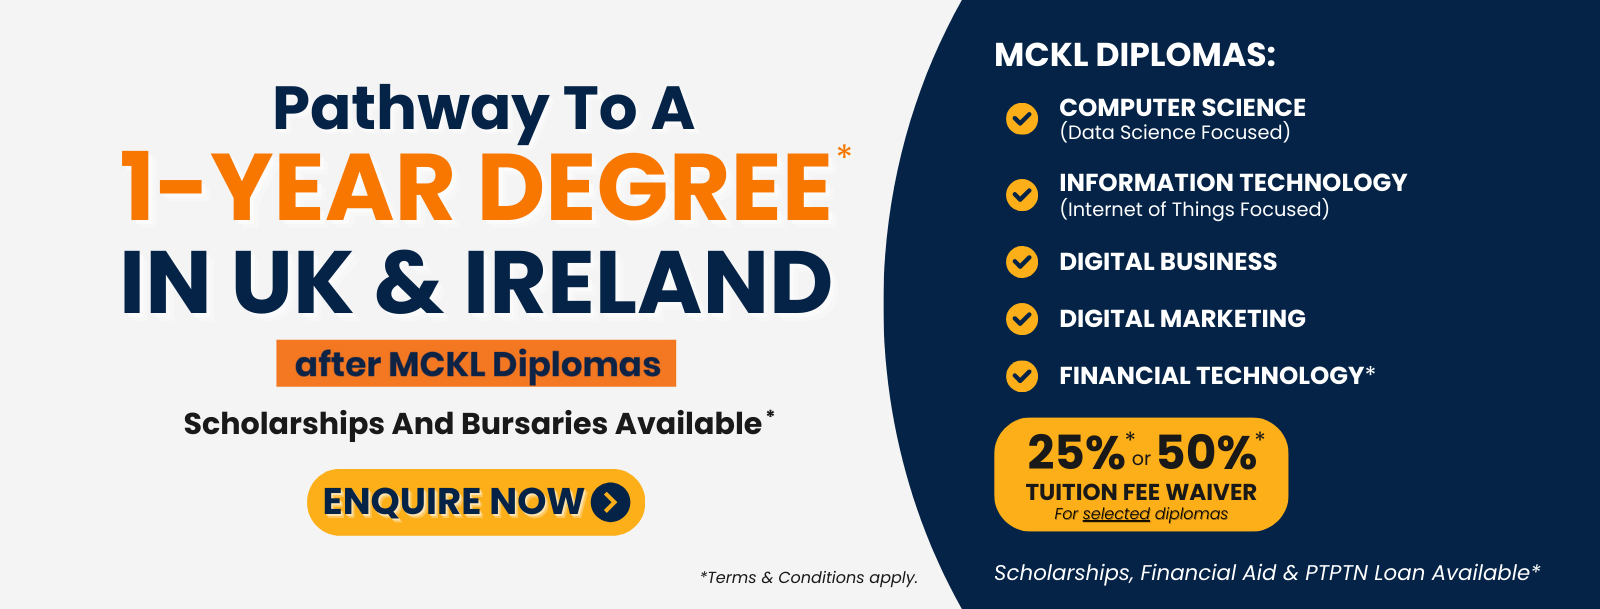 1 Year, Degree, 1-Year Degree, Pathway, UK, United Kingdom, Ireland, 1-Year Degree Pathway, Diploma, MCKL Diplomas, MCKL